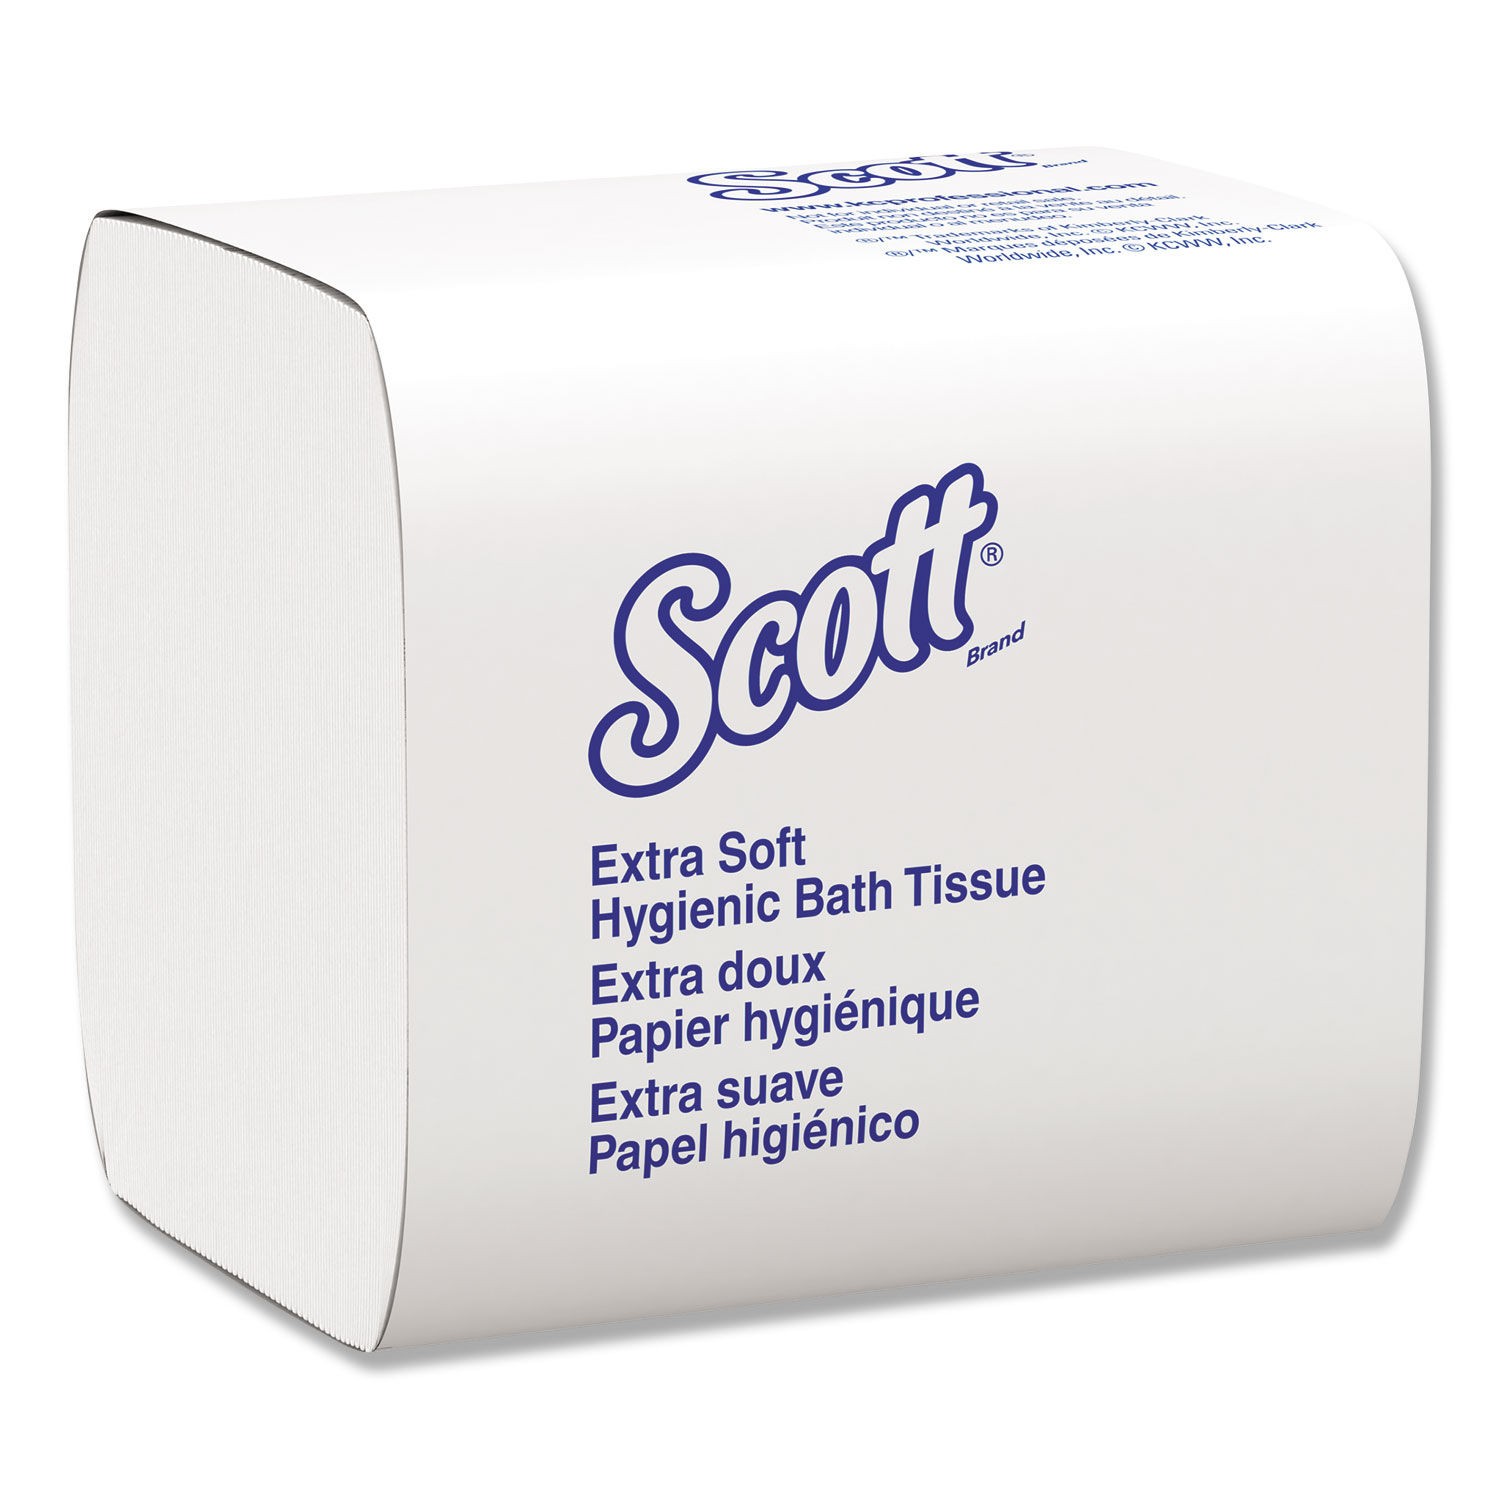 Scott Control Hygienic Bath Tissue, 2-Ply, 250/Pack, 36 Packs/Carton